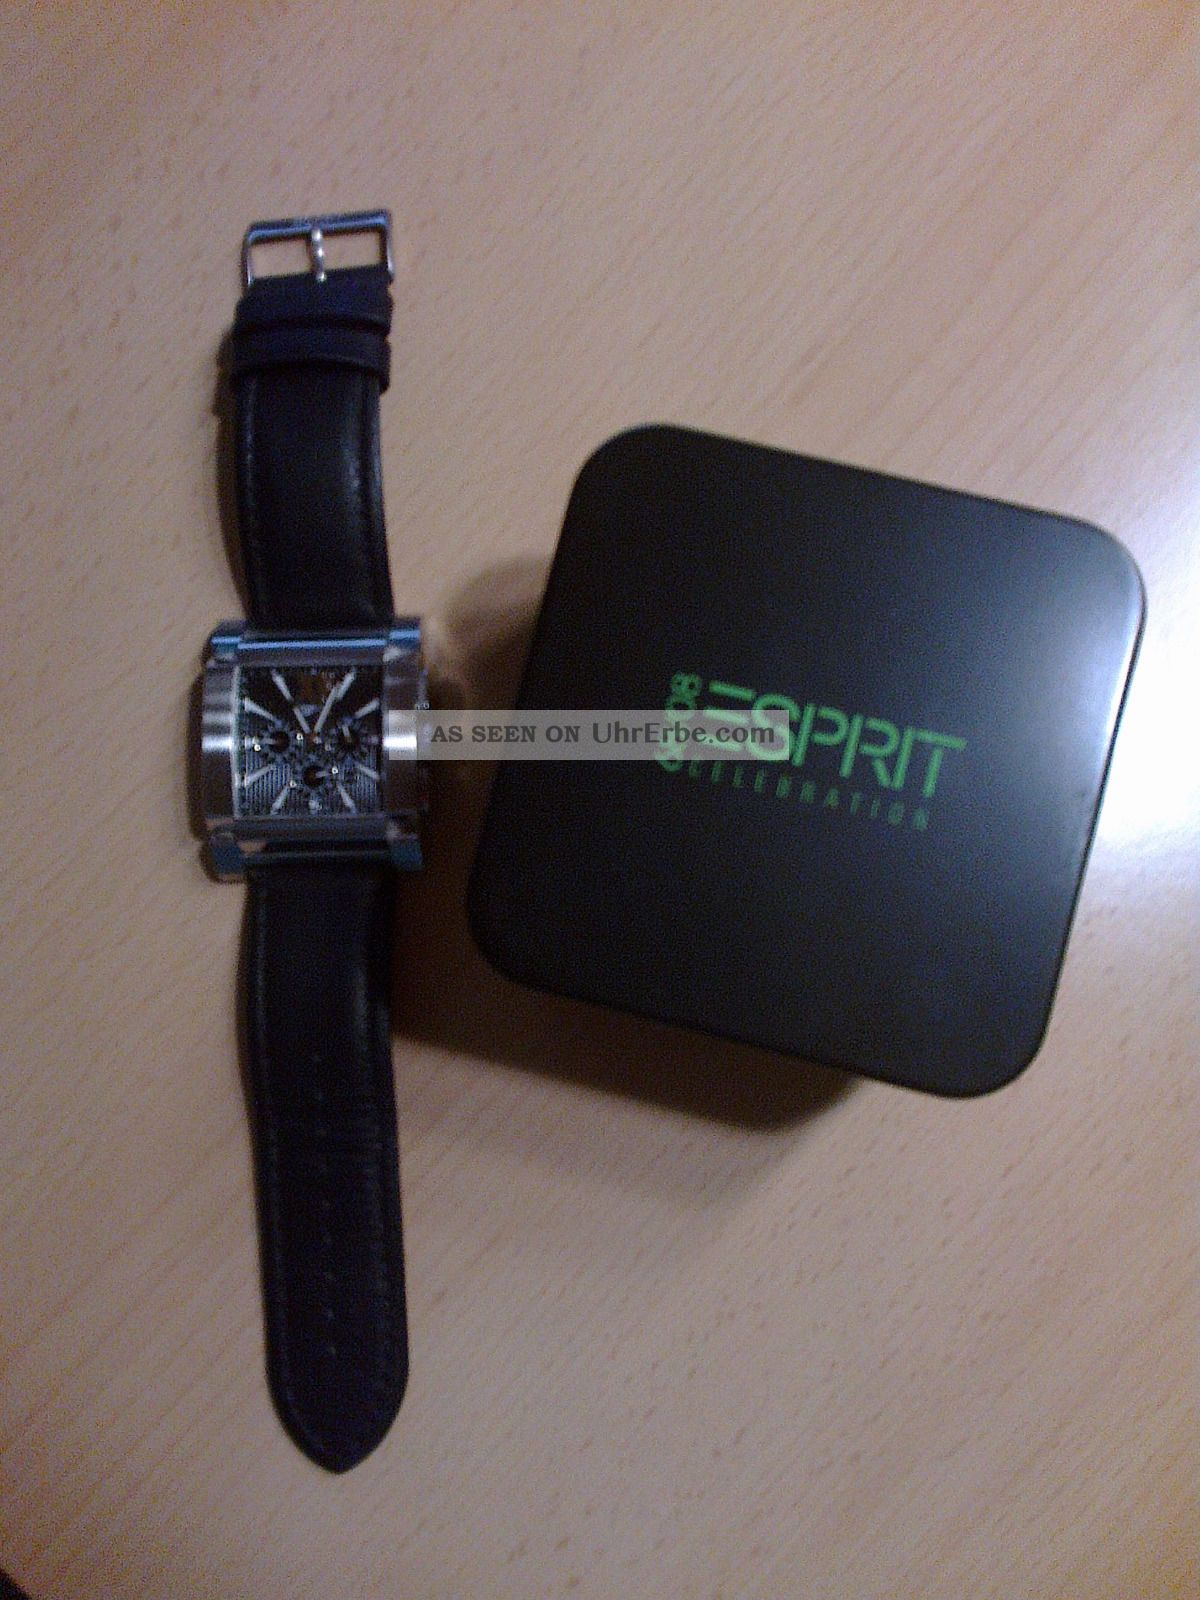 Esprit Uhr Black Galaxy Armbanduhren Bild